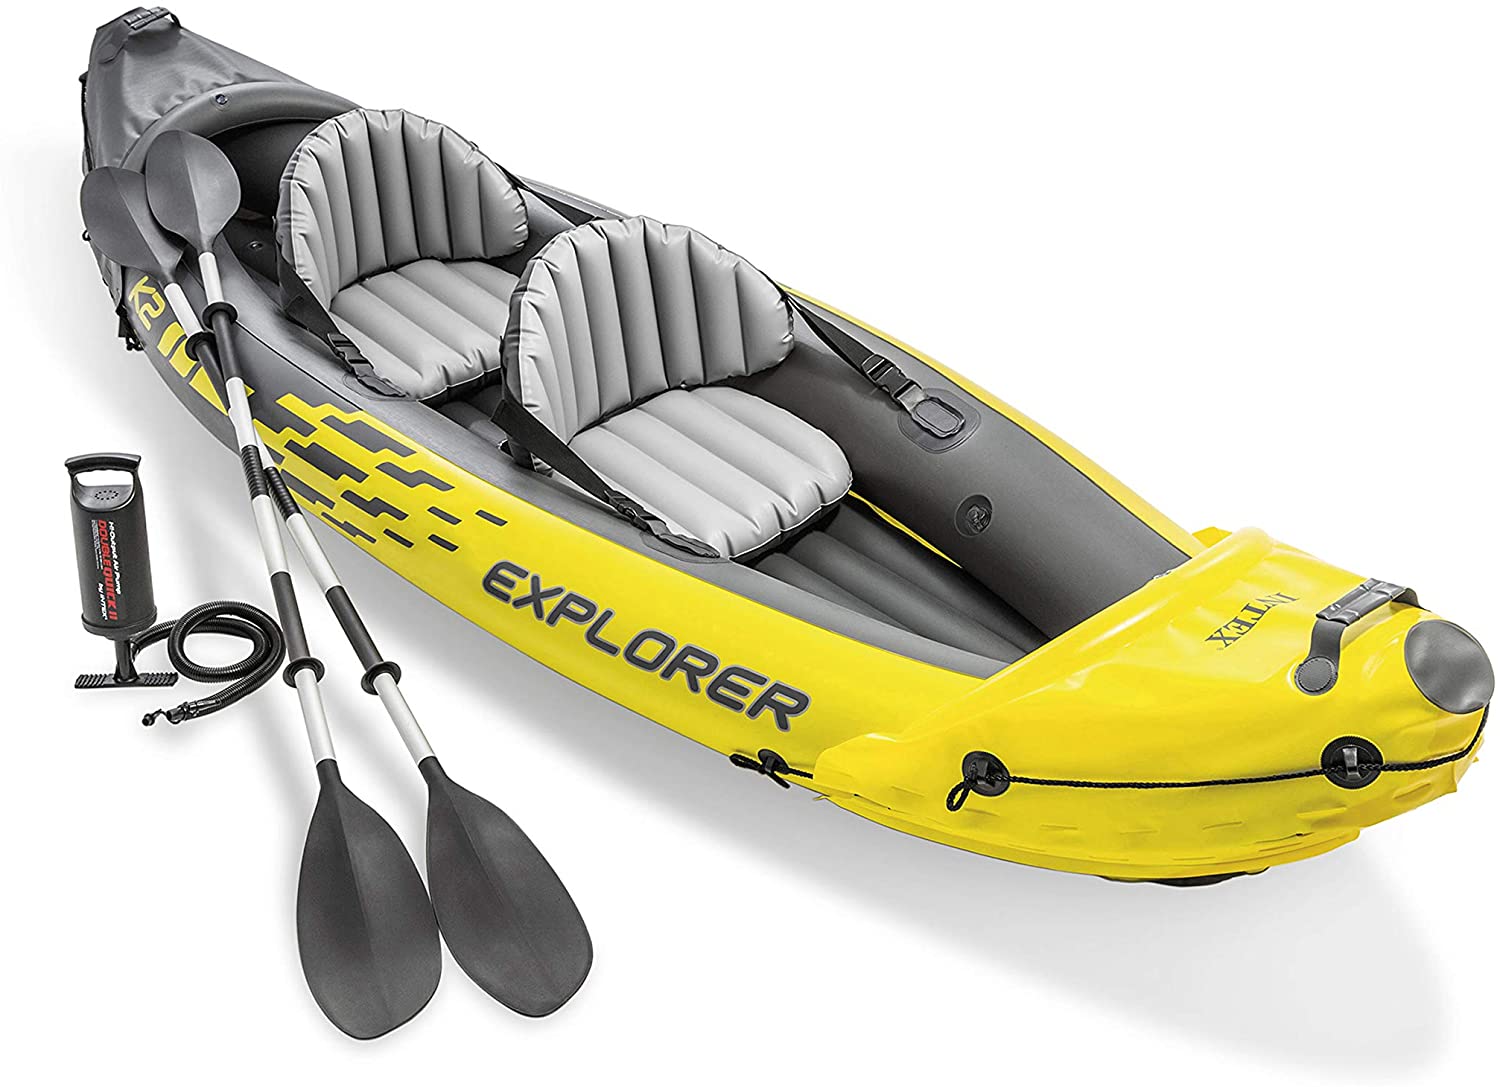 Intex Explorer K2 - one of thetop 10 best inflatable kayaks